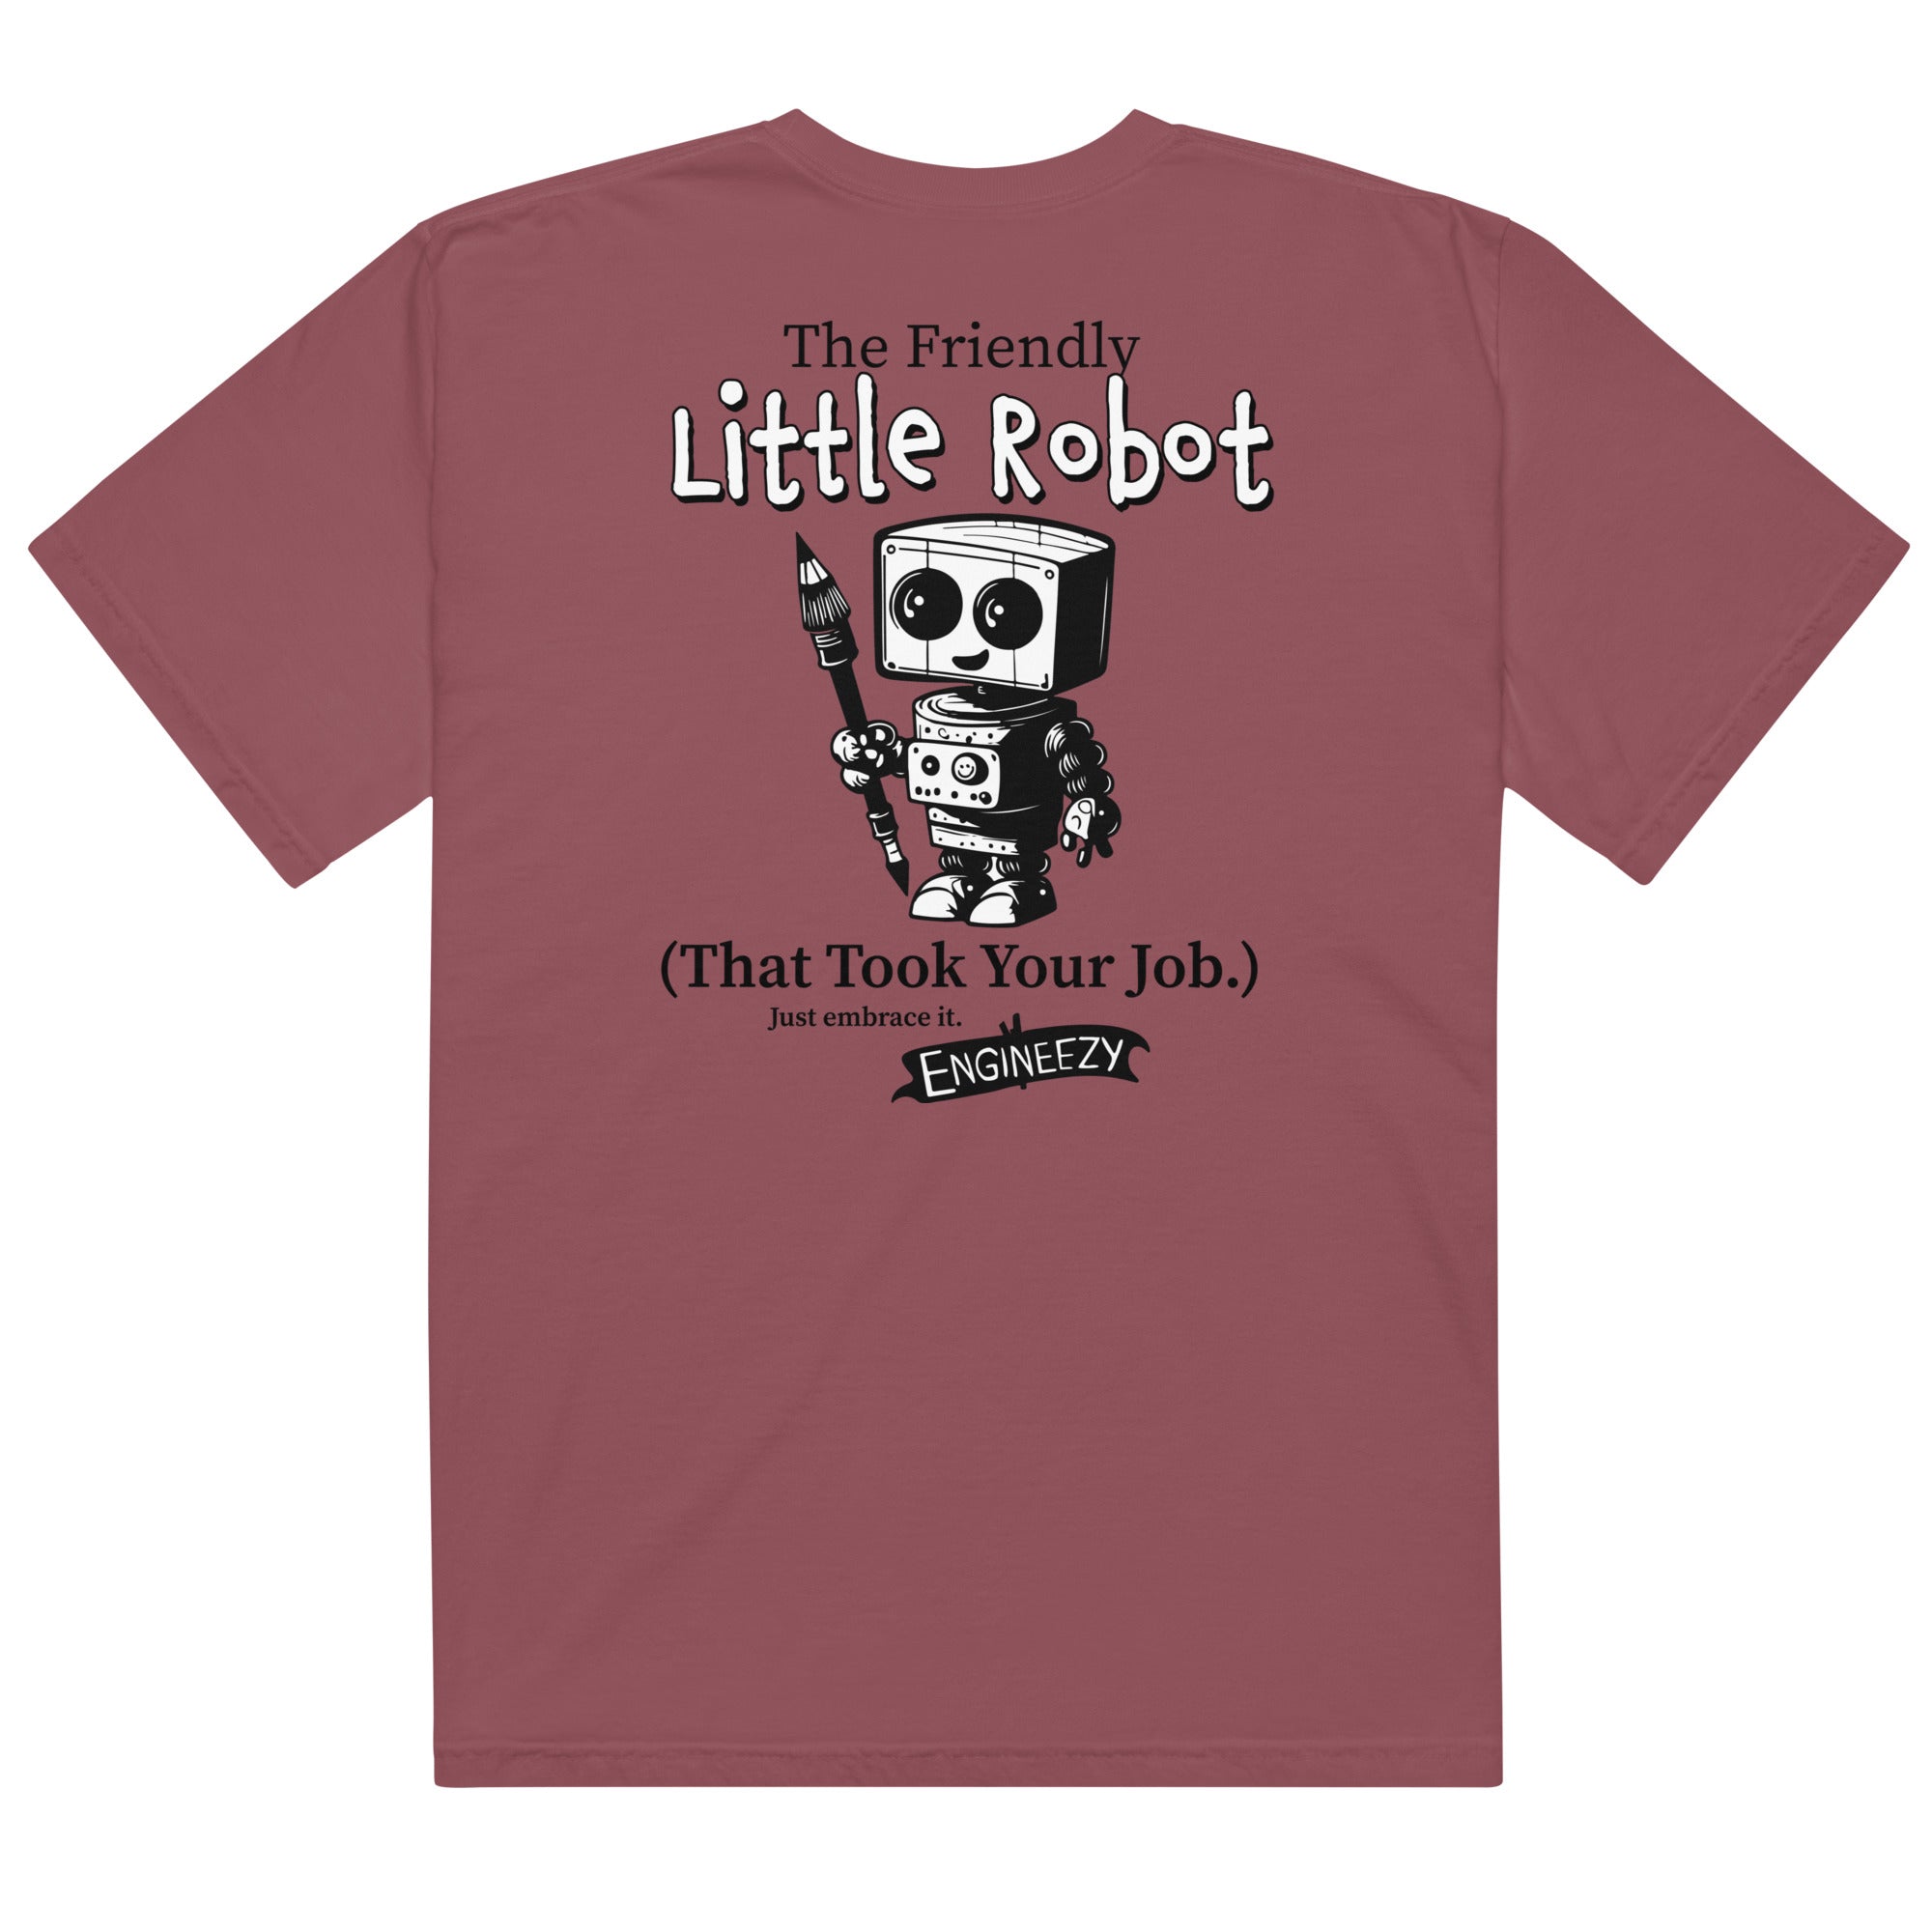 The Friendly Little Robot Tee